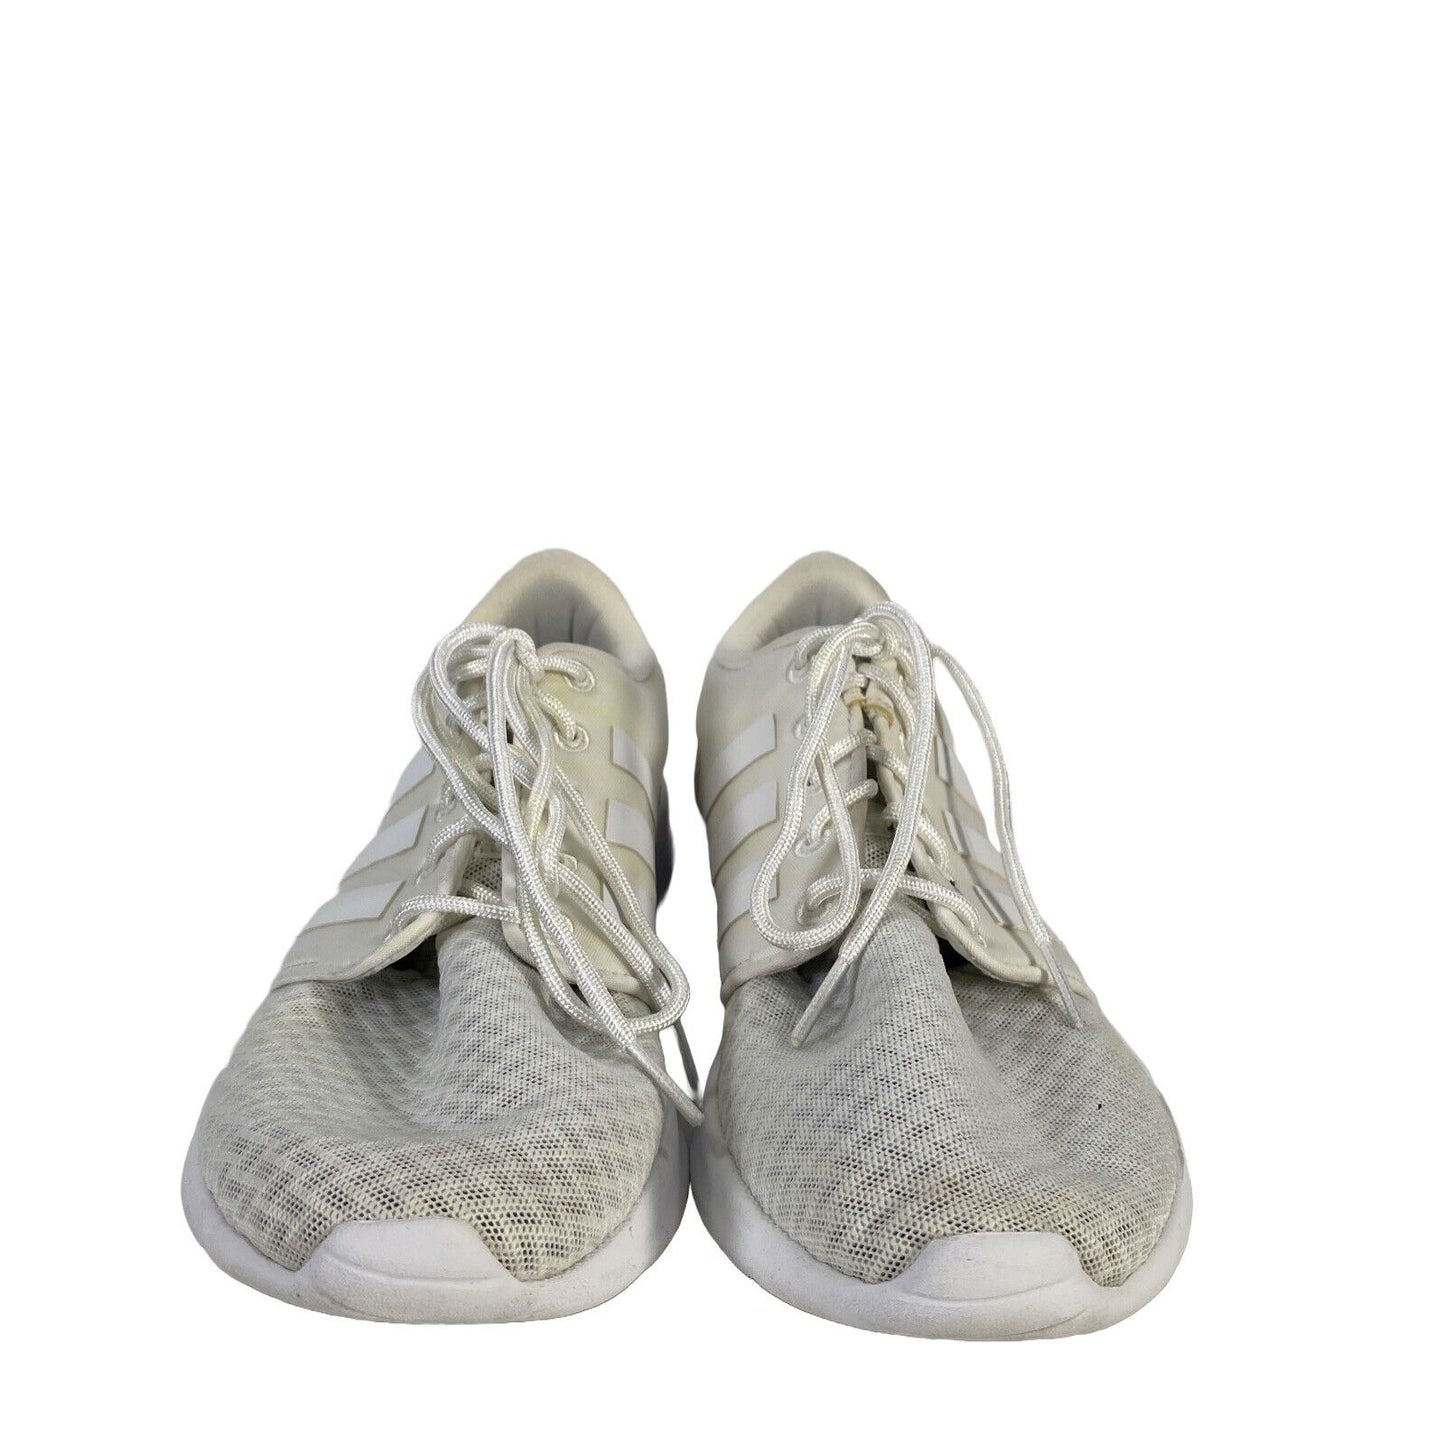 Adidas Women's White Cloadfoam Lace Up QT Racer Comfort Sneakers - 9